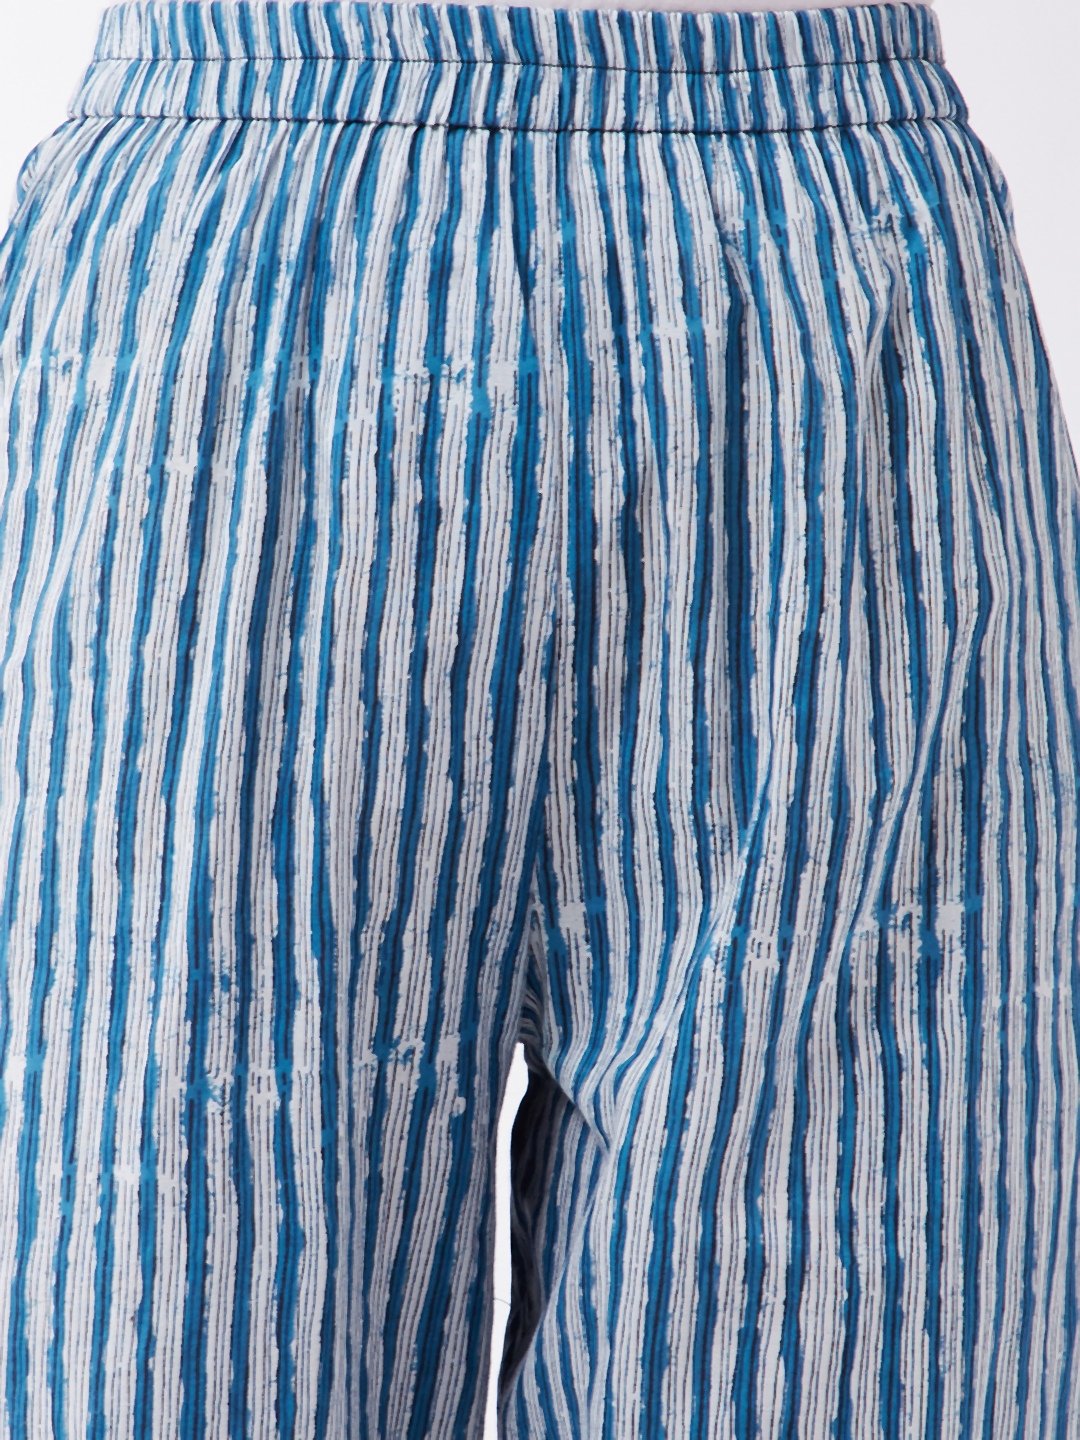 Indigo Striped Pant